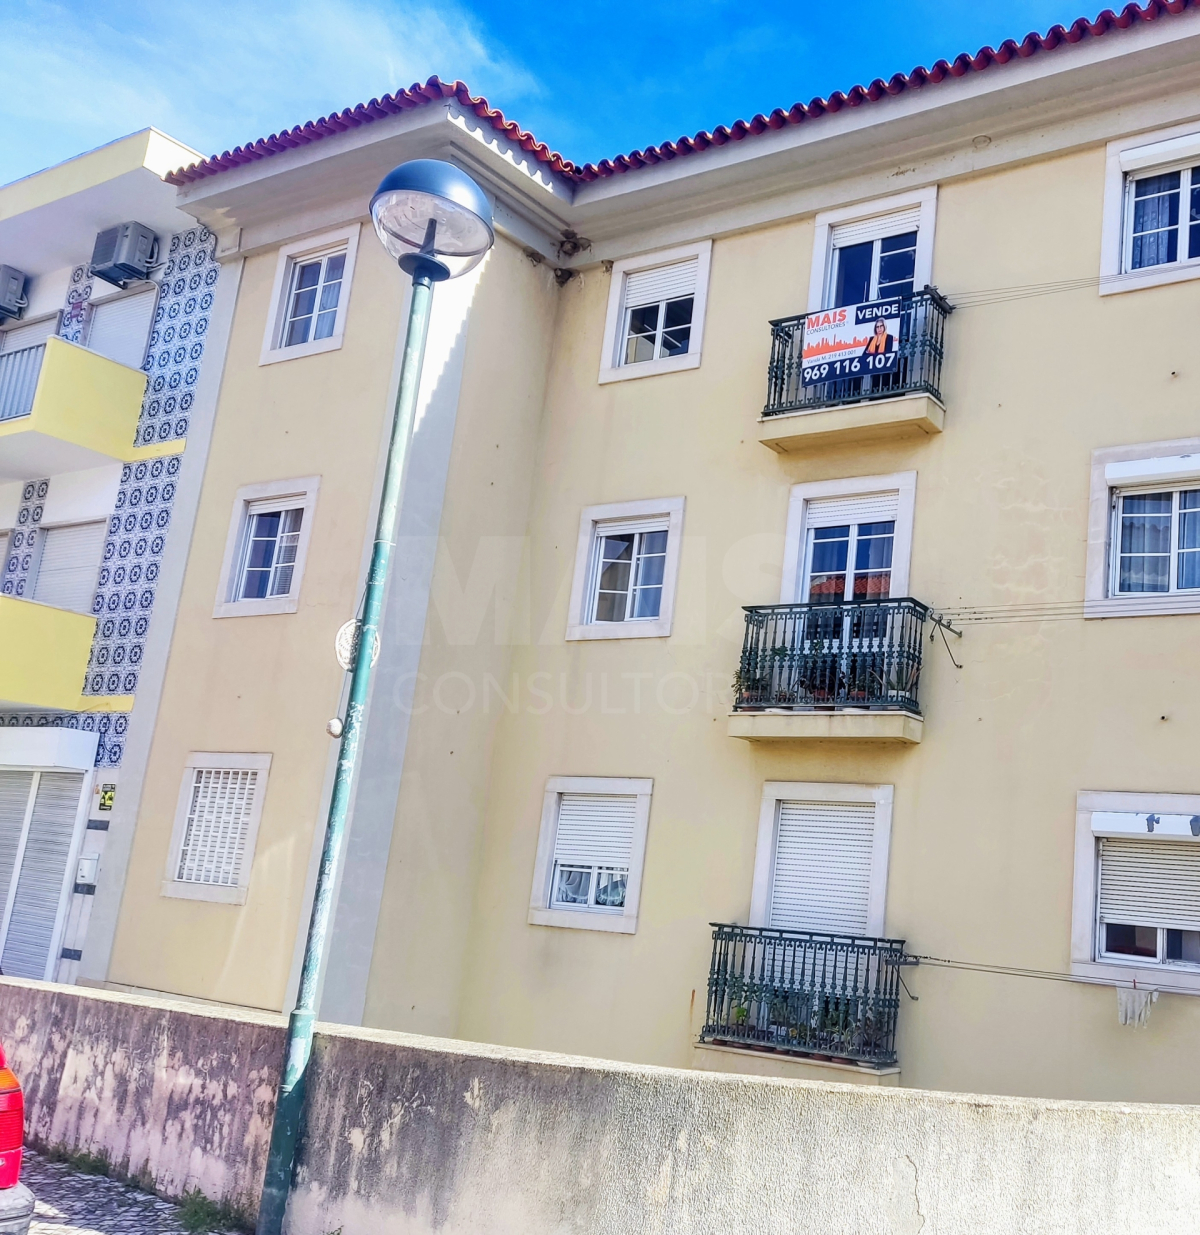 3-bedr. apartment in Apelação with parking space